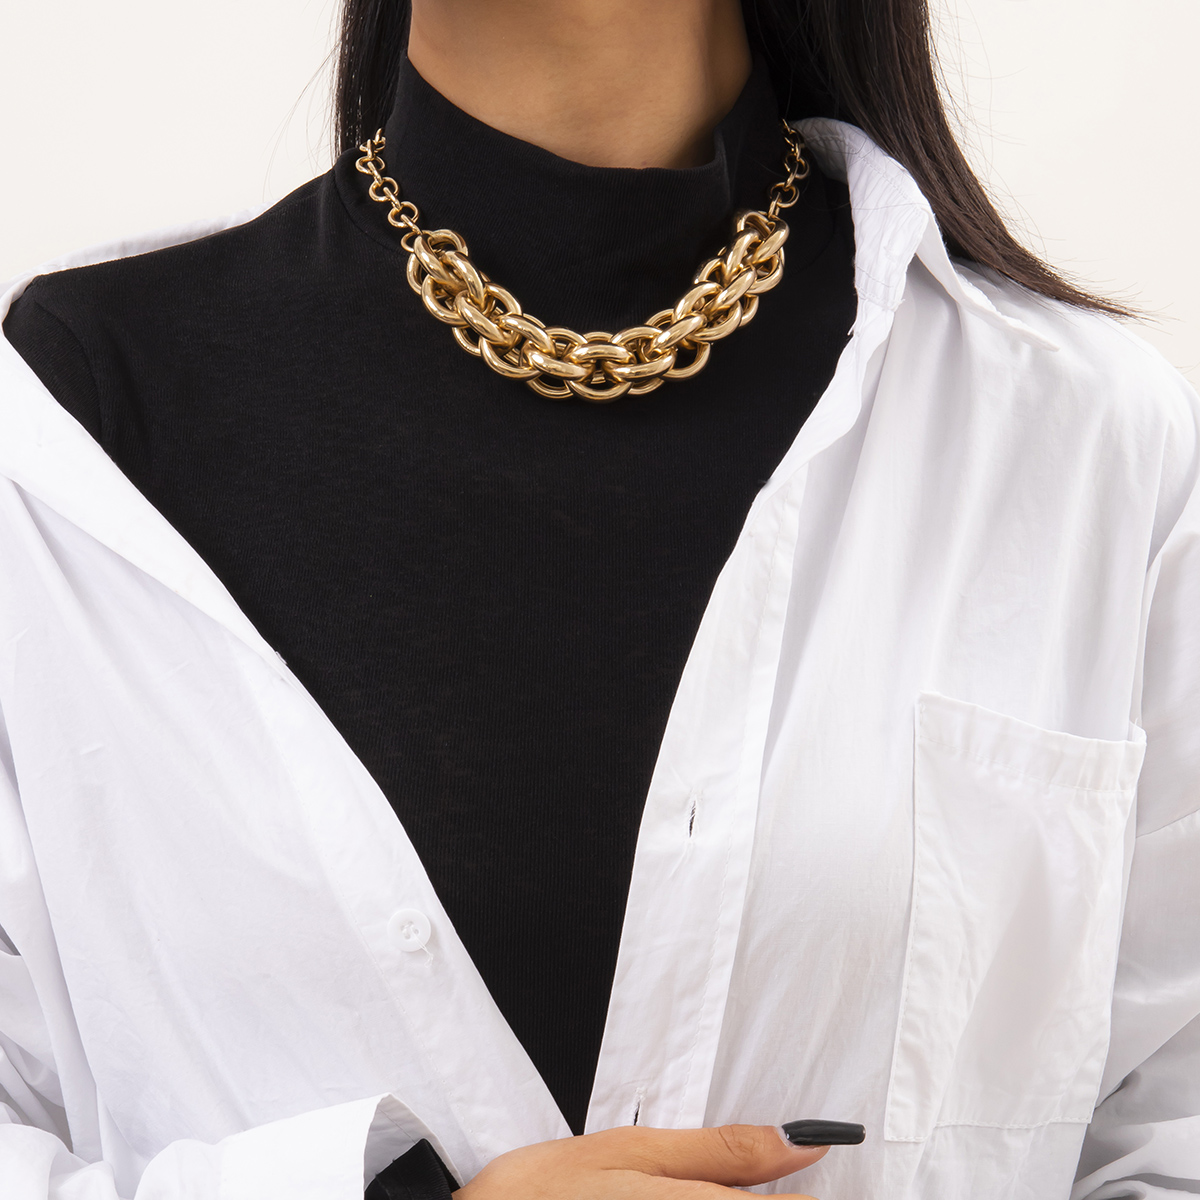 C03816 Geometric U-shaped Irregular Street Style Hip-hop Chunky Chain Necklace For Women Girls